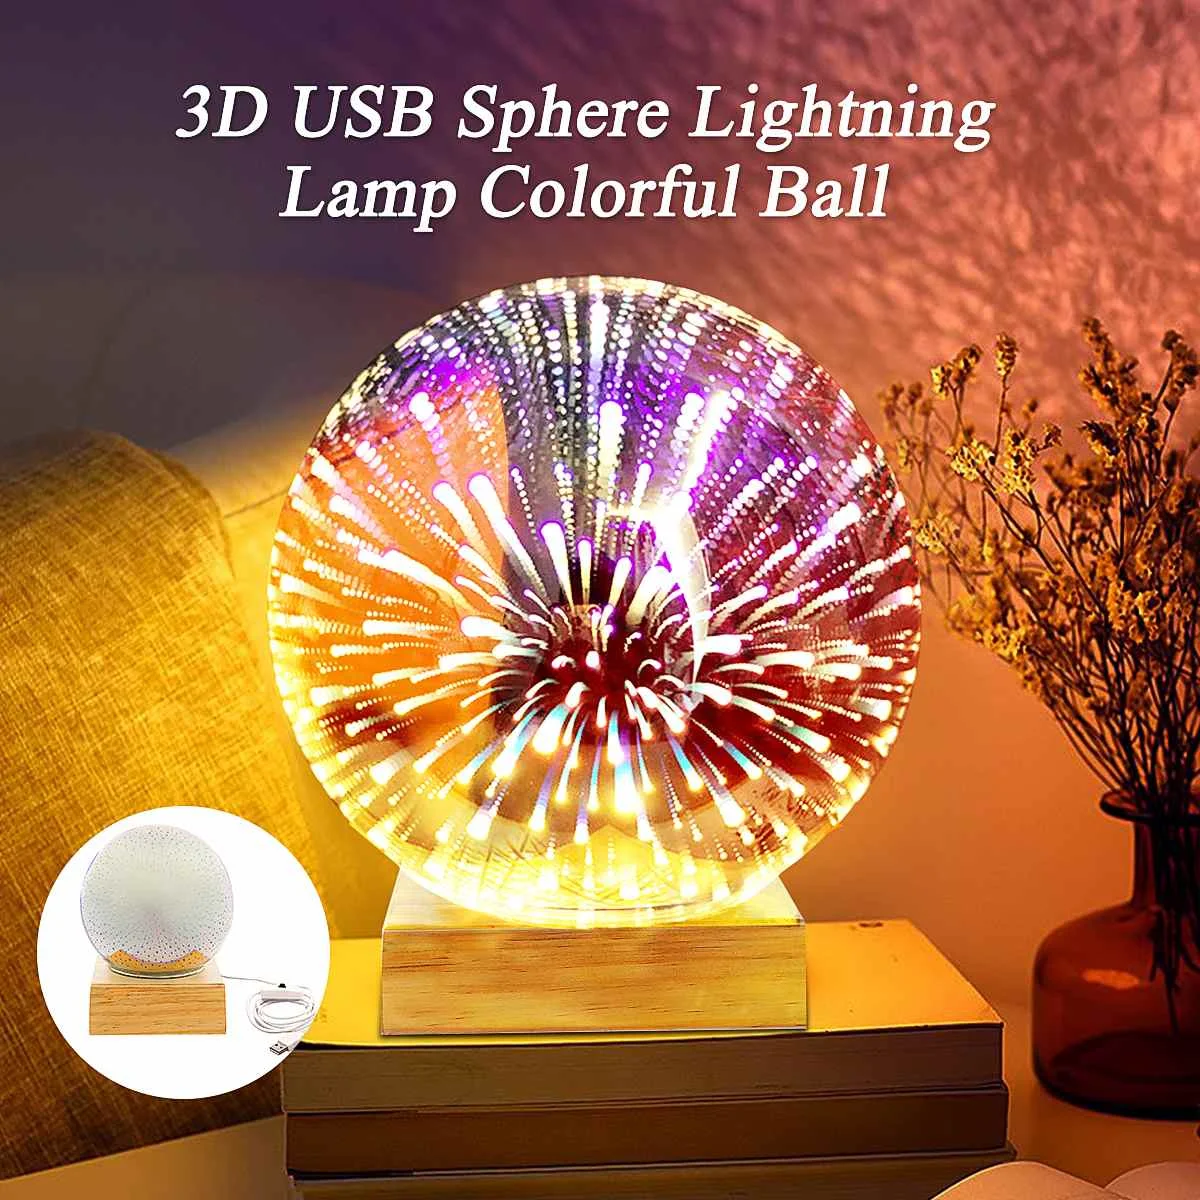 USB 3D Crystal USB Sphere Lightning Lamp Colorful Ball Night Light LED  Magic Glass Sphere Novelty Ball Light Plasma Table Lamp _ - AliExpress  Mobile